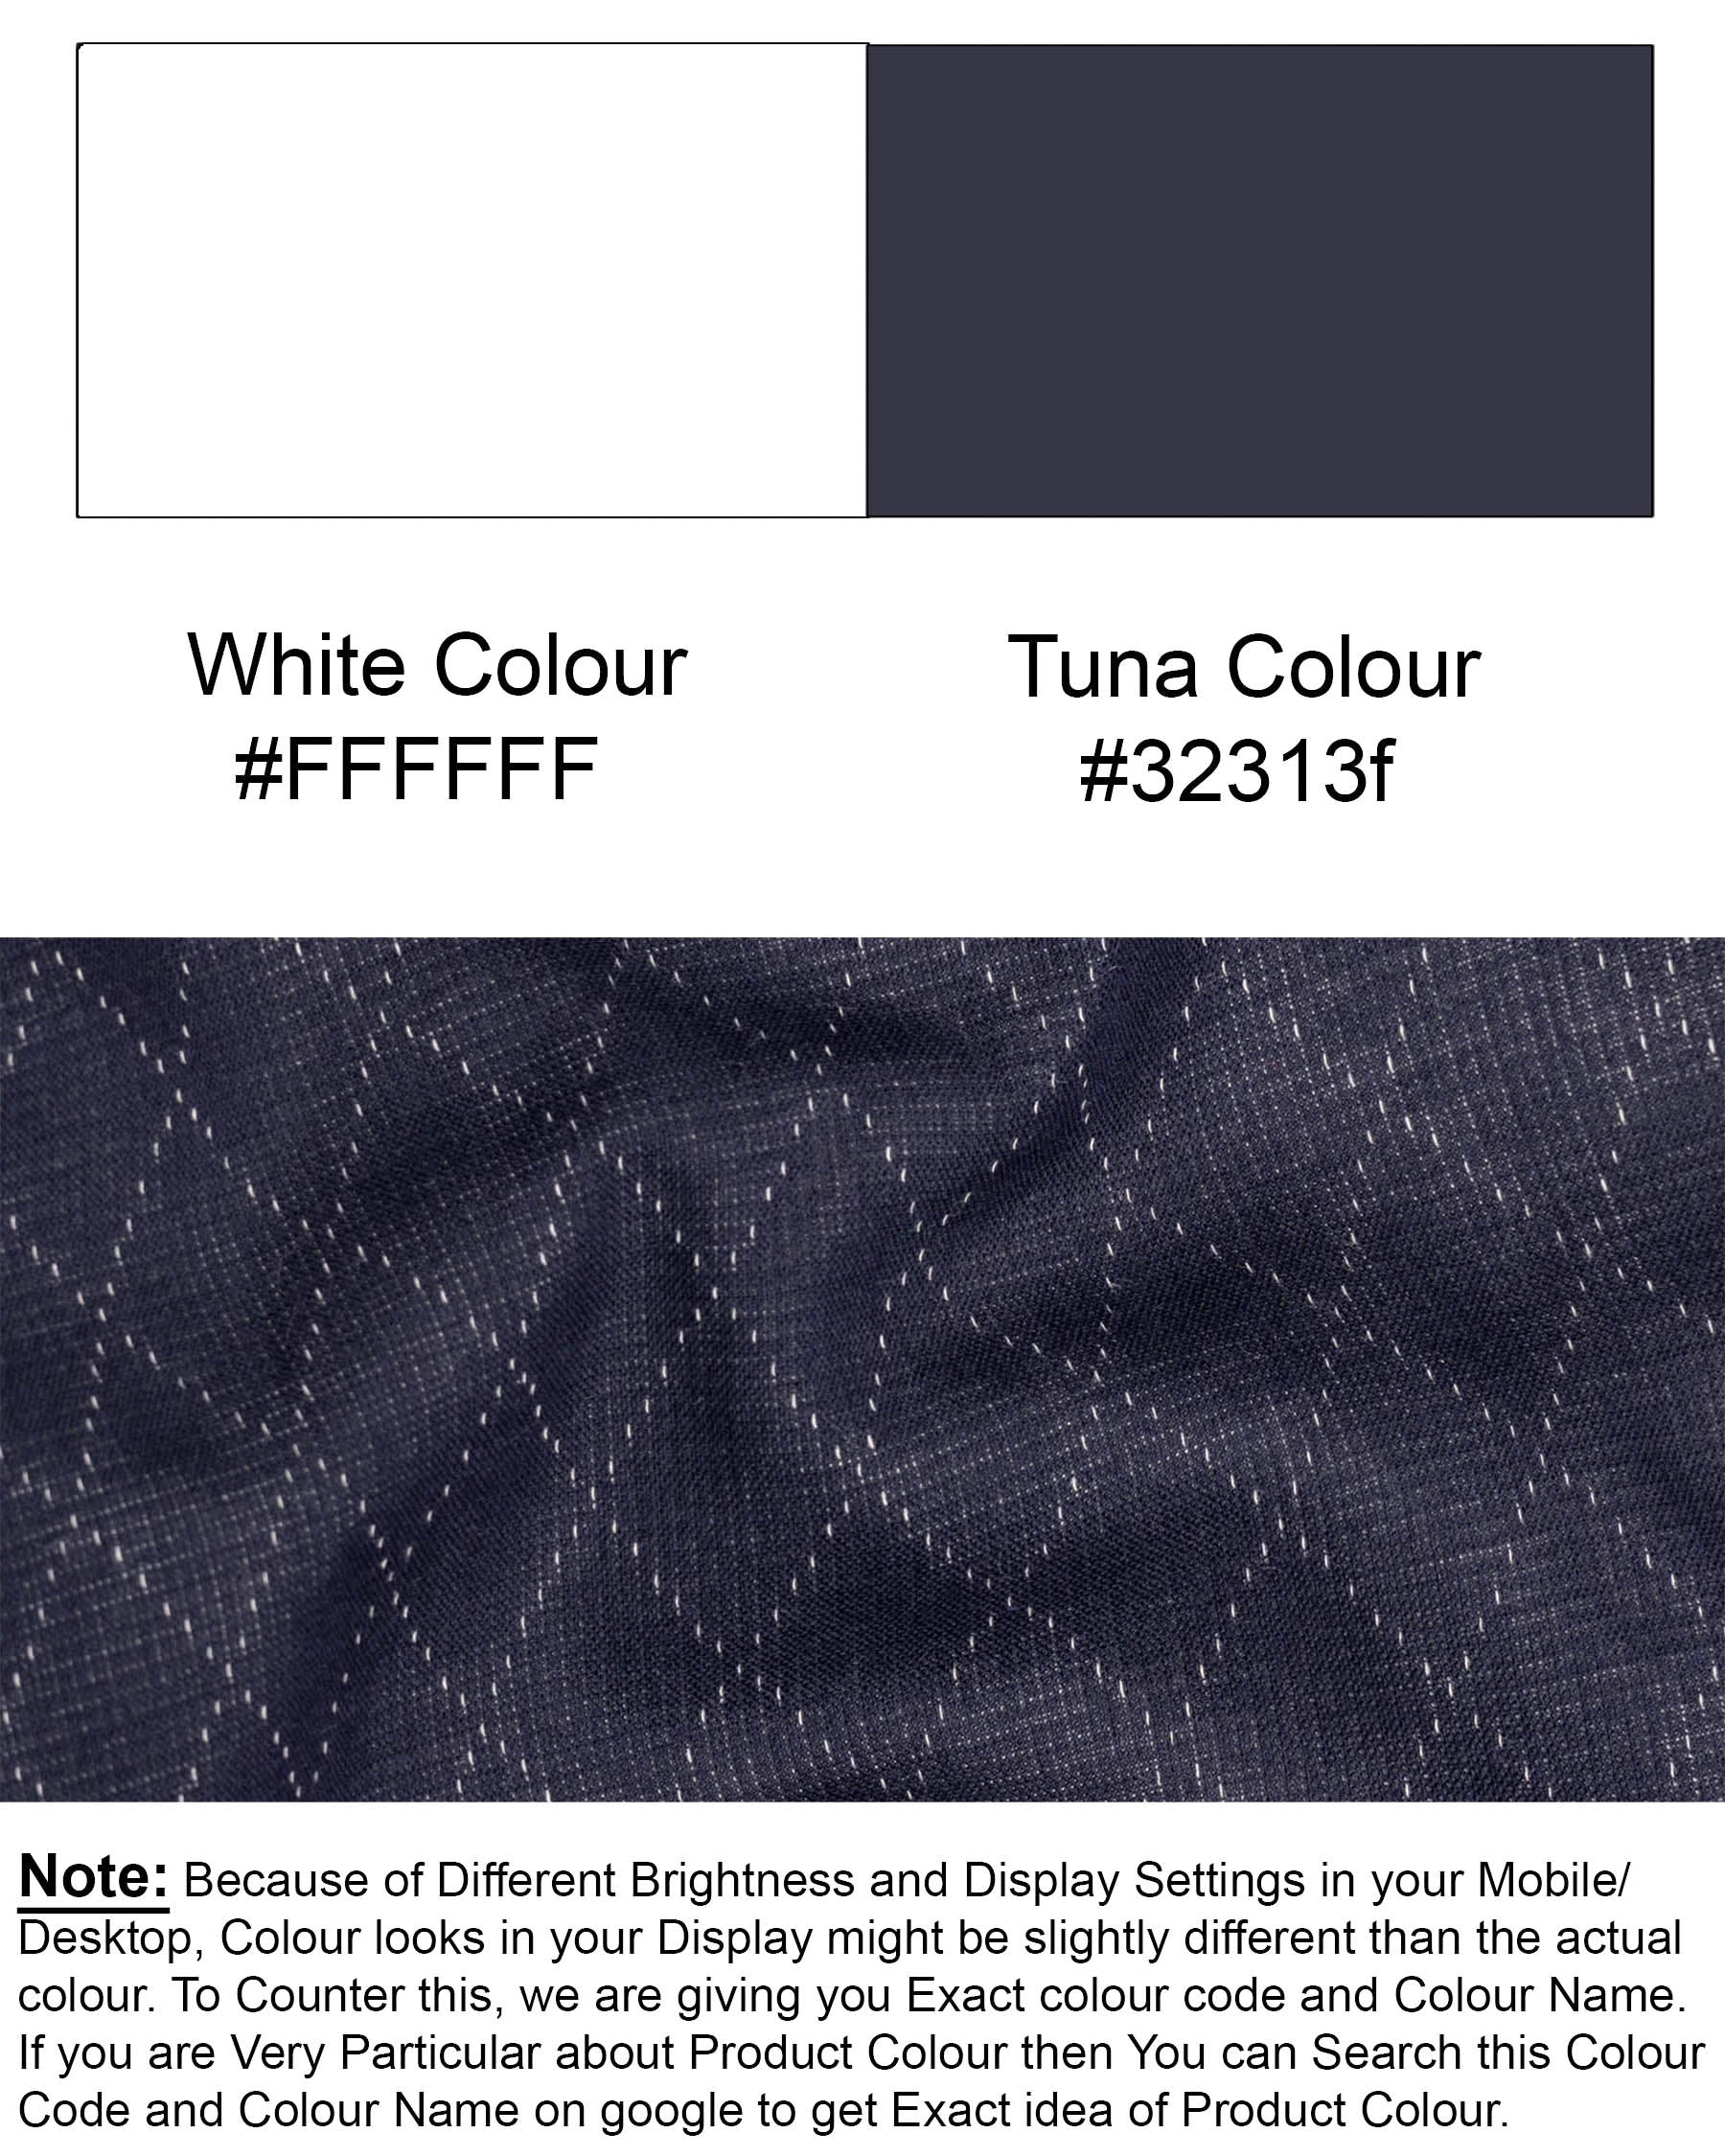 Tuna Blue Twill Textured Double Cloth Premium Cotton Shirt 6183-CLOTH-P-38,6183-CLOTH-P-H-38,6183-CLOTH-P-39,6183-CLOTH-P-H-39,6183-CLOTH-P-40,6183-CLOTH-P-H-40,6183-CLOTH-P-42,6183-CLOTH-P-H-42,6183-CLOTH-P-44,6183-CLOTH-P-H-44,6183-CLOTH-P-46,6183-CLOTH-P-H-46,6183-CLOTH-P-48,6183-CLOTH-P-H-48,6183-CLOTH-P-50,6183-CLOTH-P-H-50,6183-CLOTH-P-52,6183-CLOTH-P-H-52